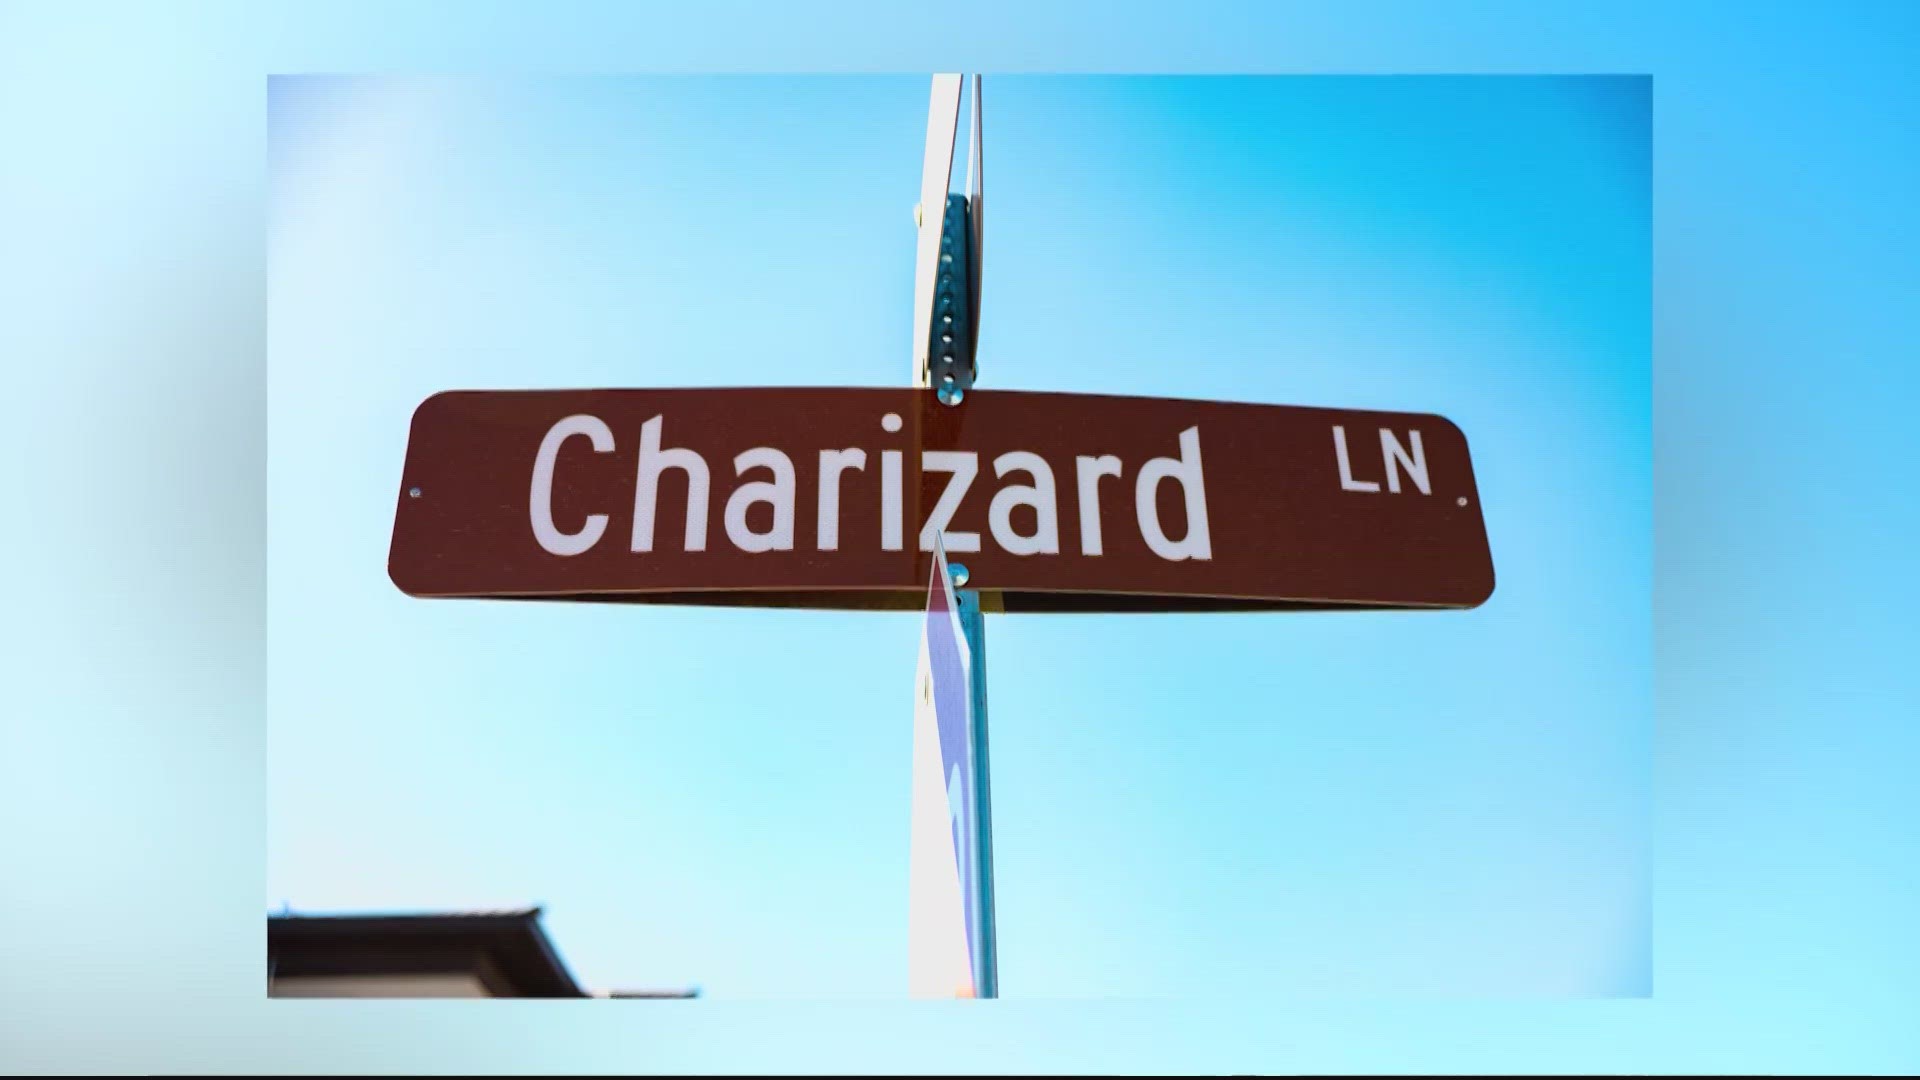 A new neighborhood in Henderson, Nevada has street names inspired by Pokémon.